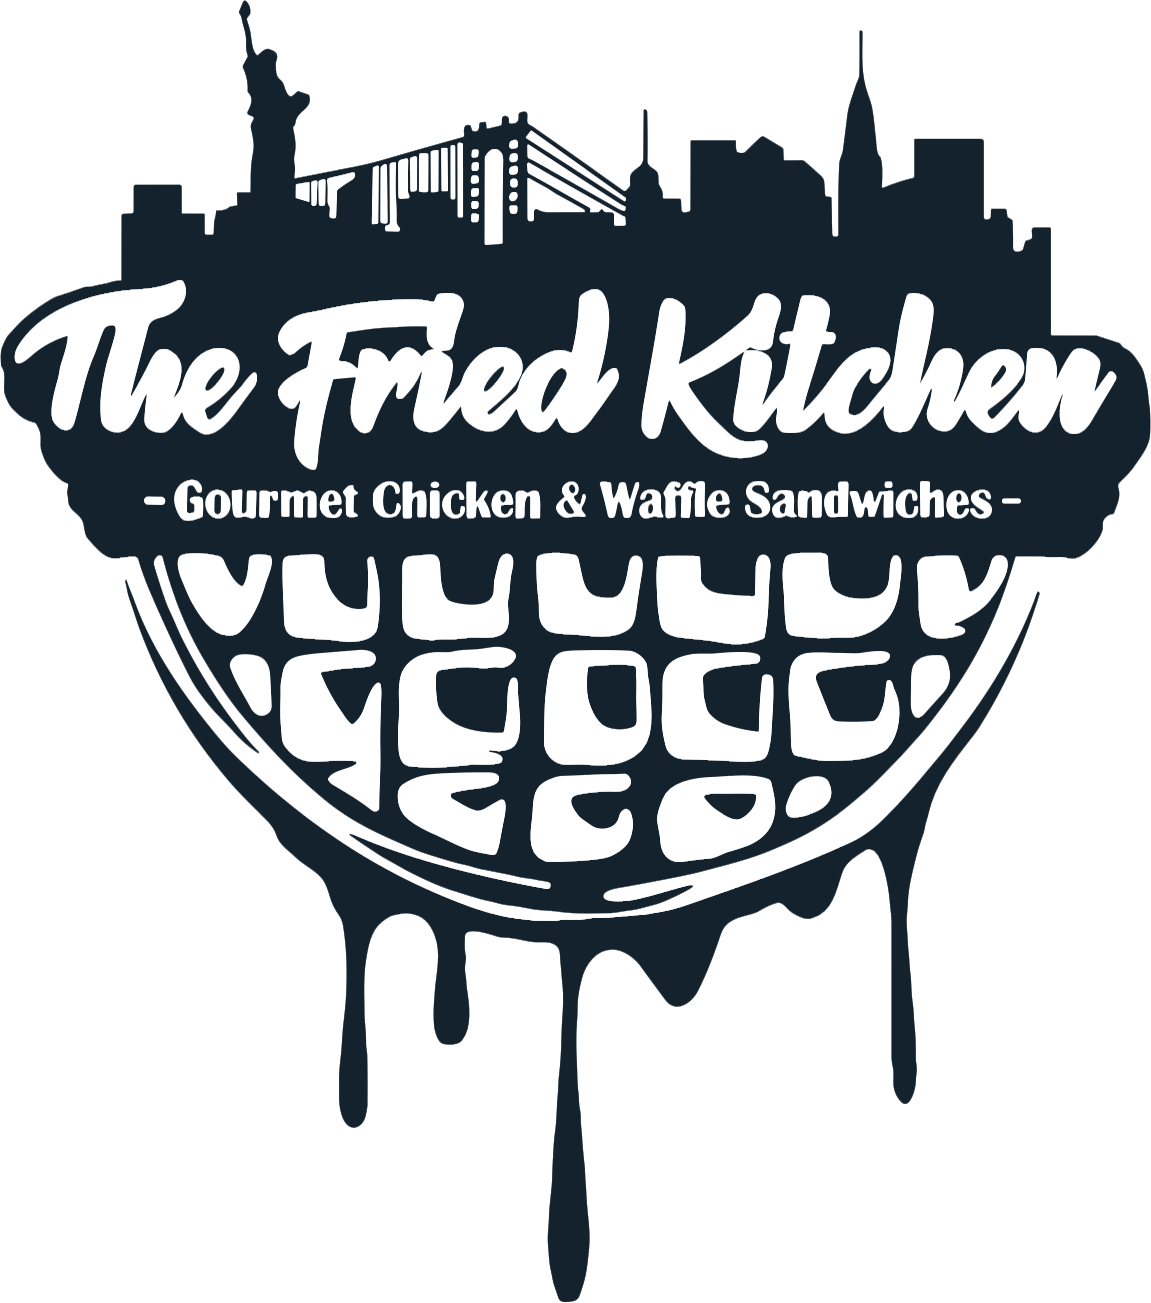 The Fried Kitchen - Gourmet Chicken & Waffle Sandwiches